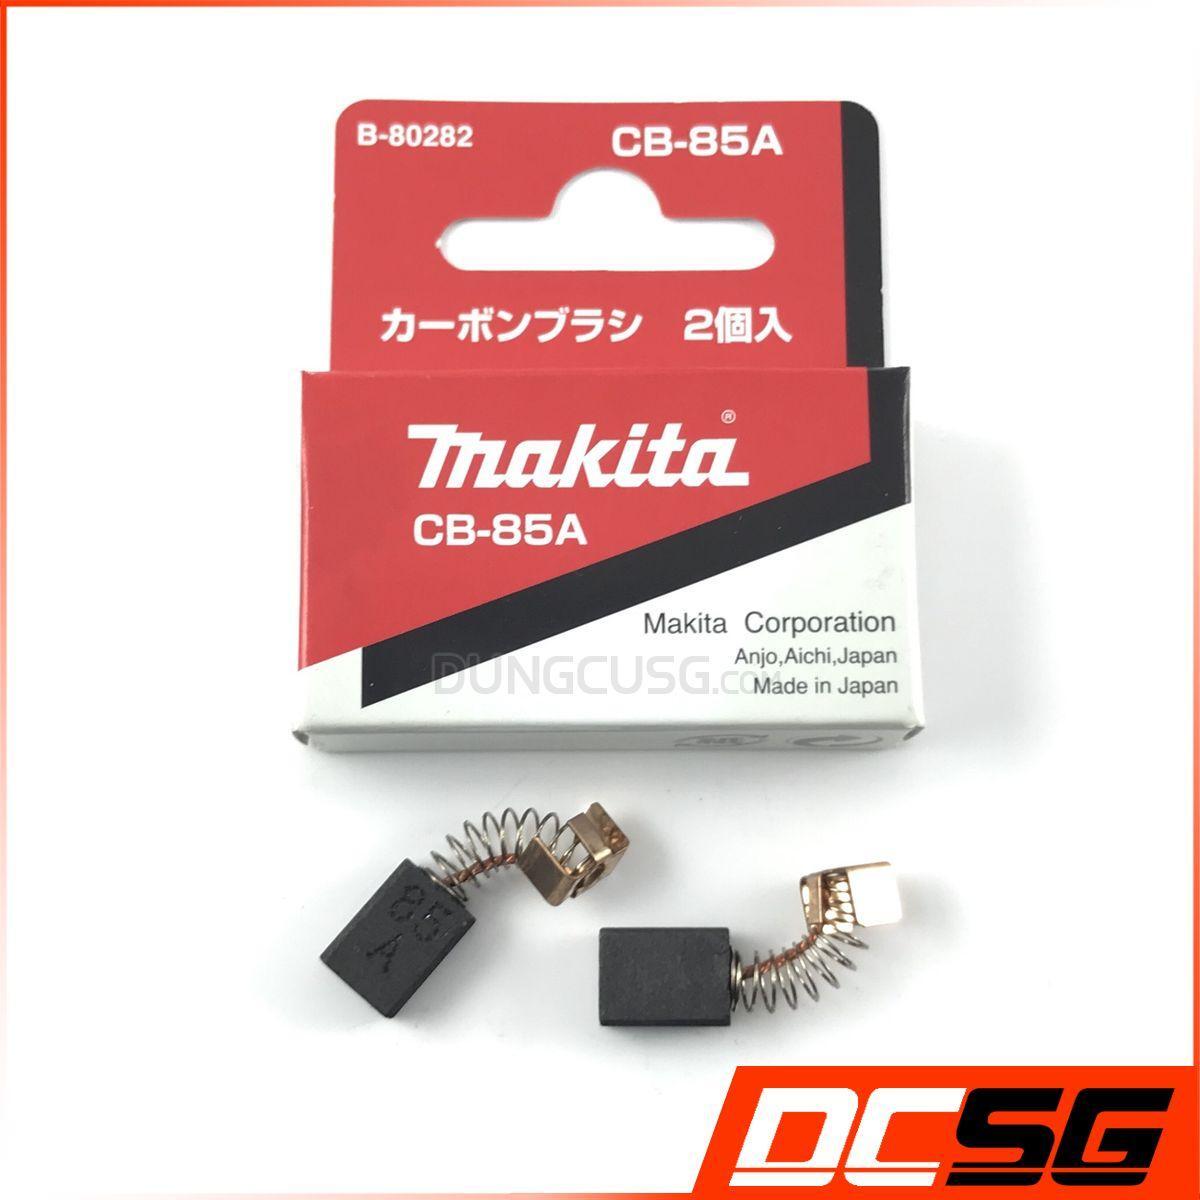 Chổi than Makita (CB-85A) B-80282